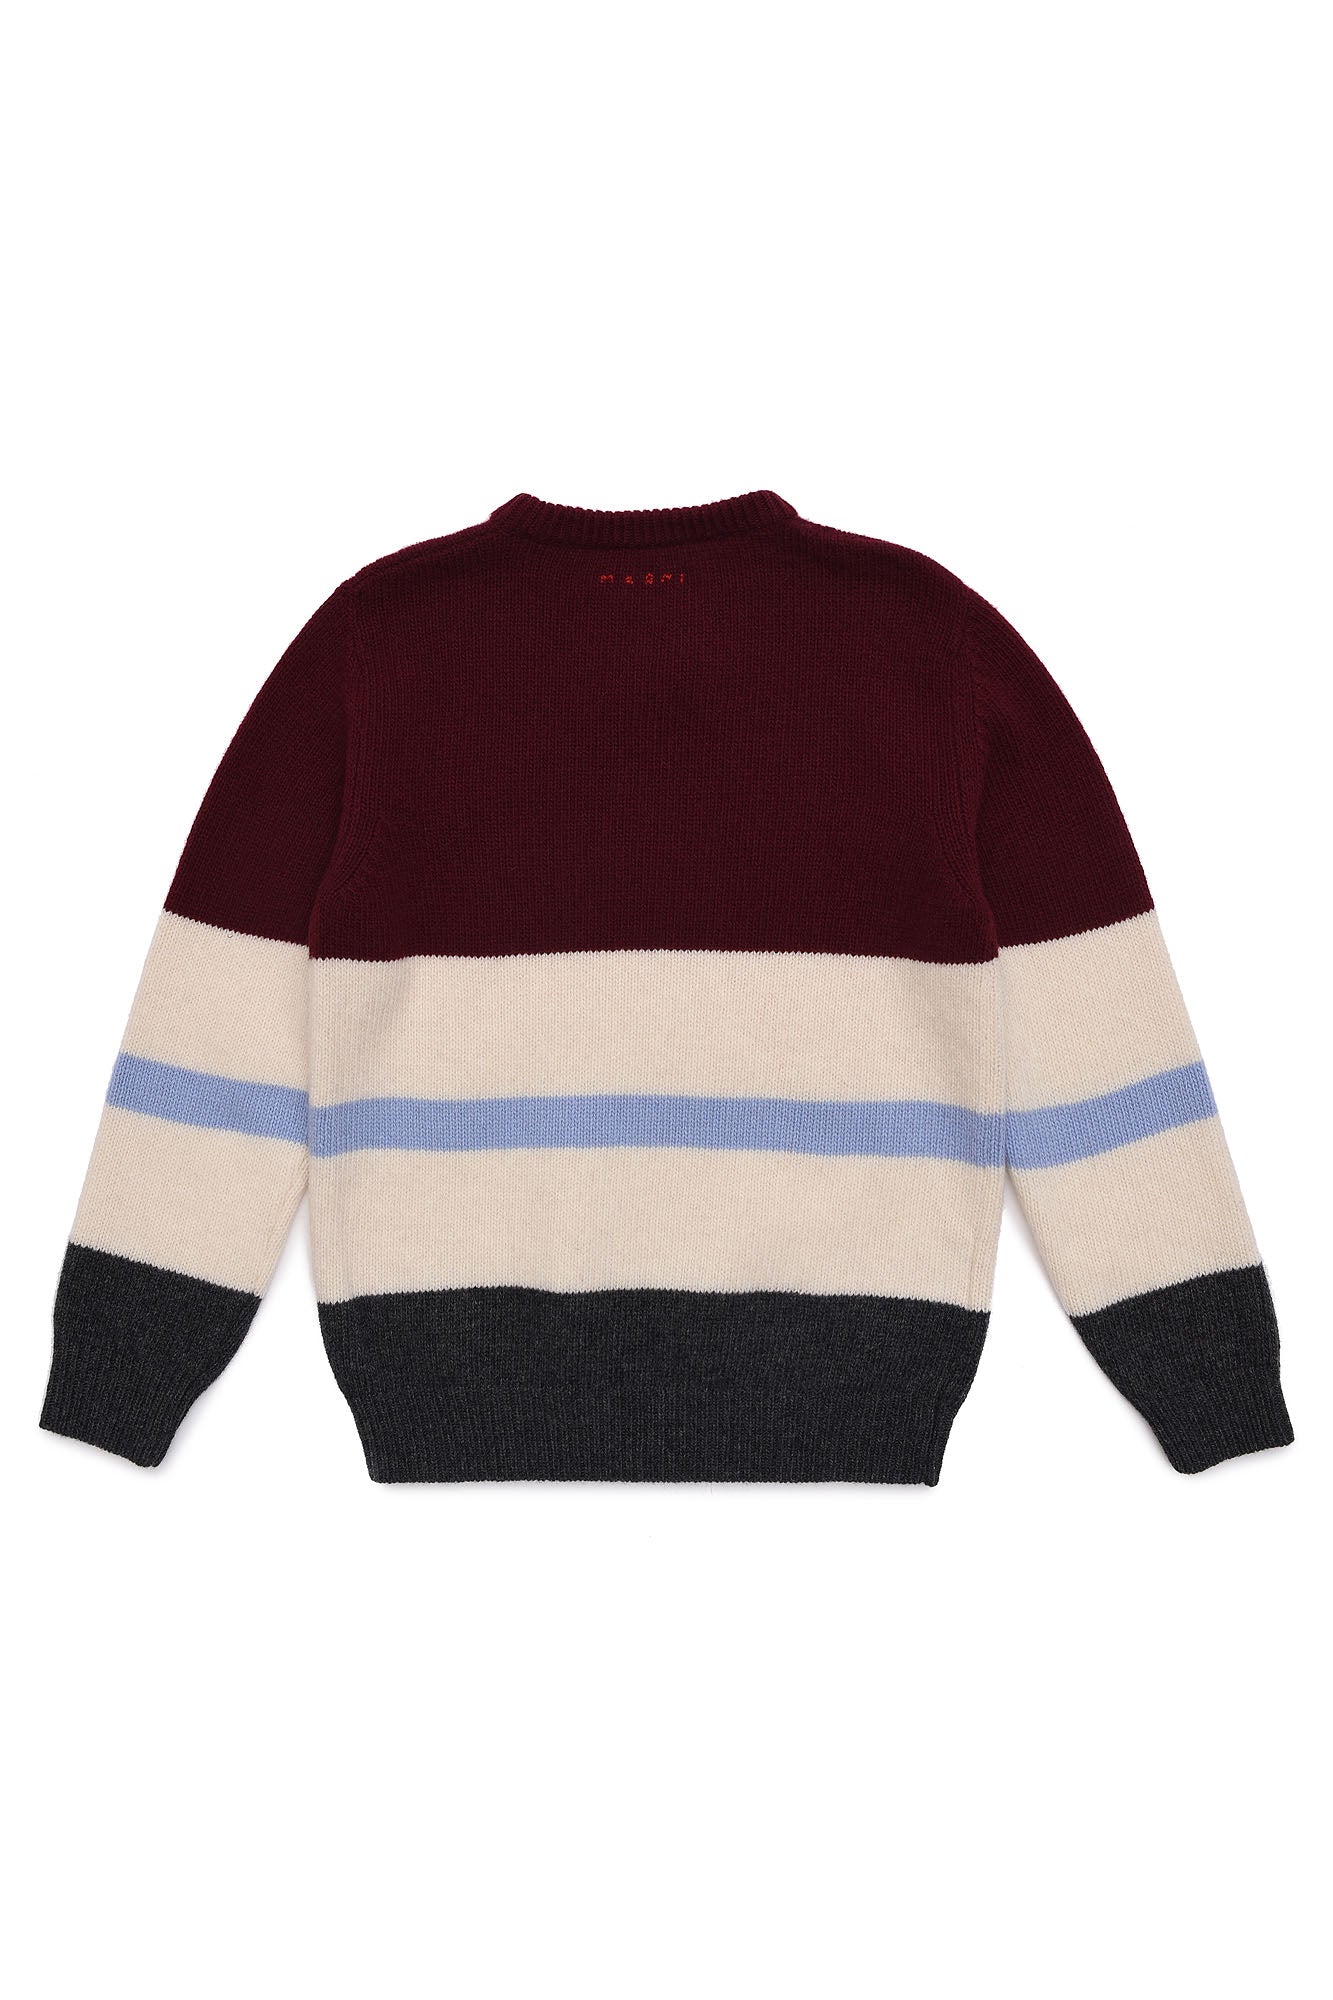 Boys & Girls Wine Red Wool Sweater